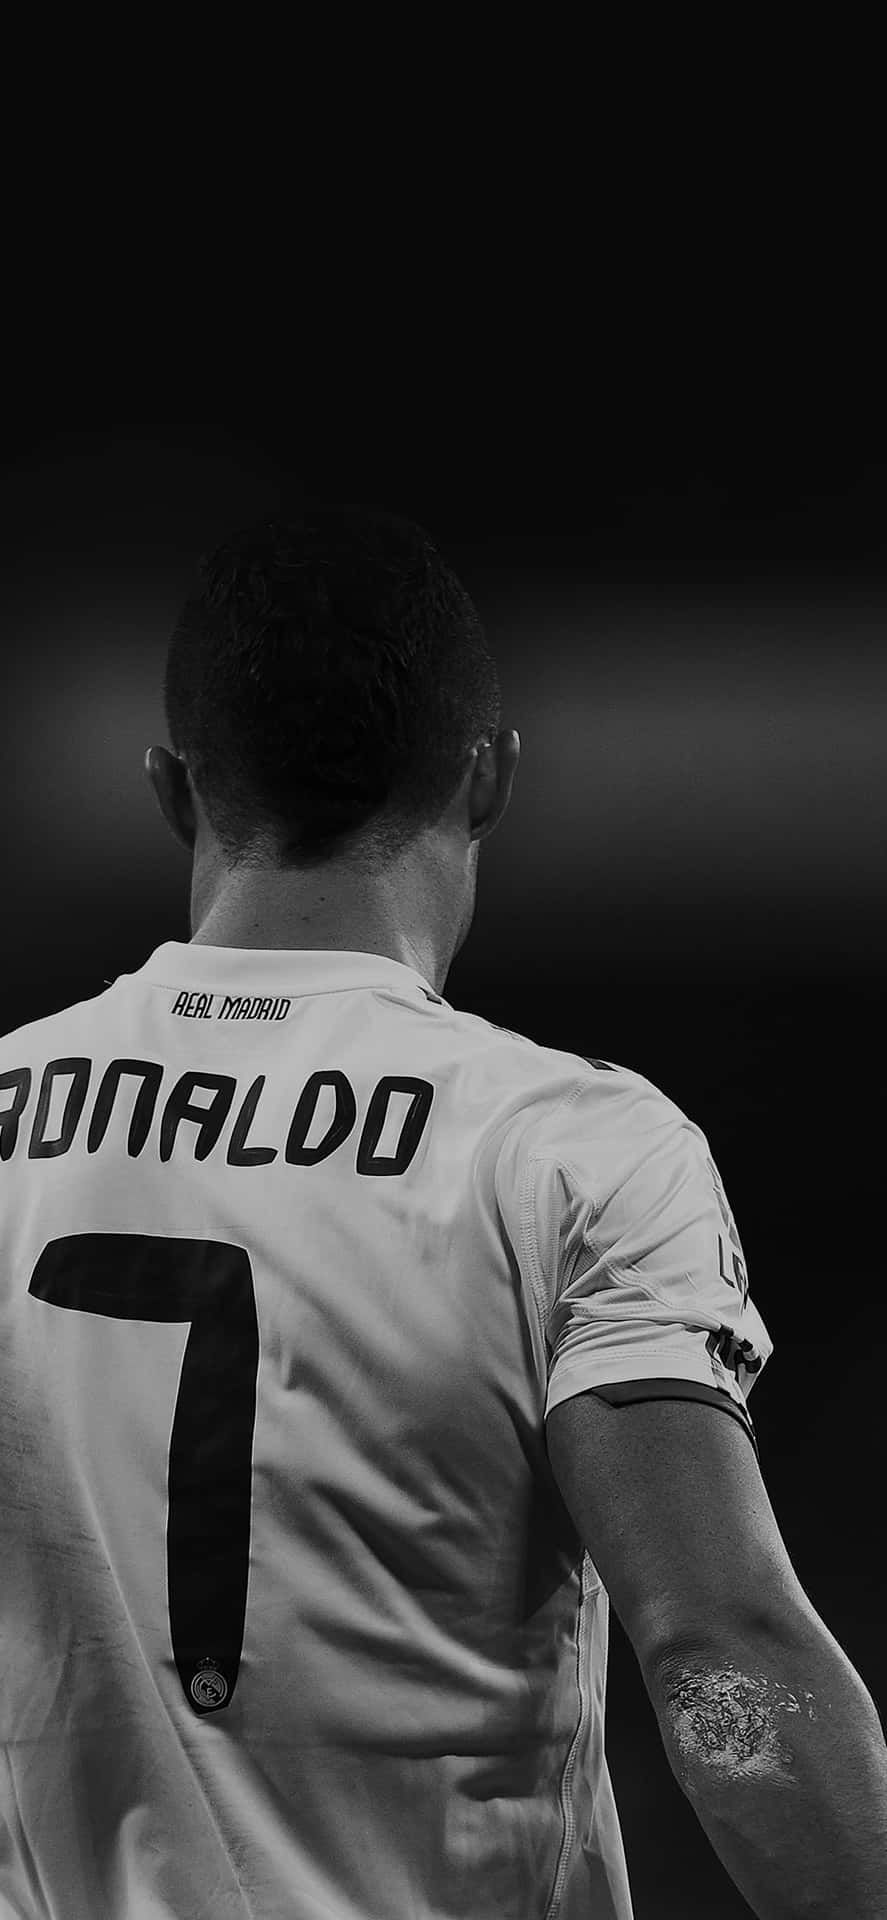 Cristiano Ronaldo sparker en fri bold under et fodboldspil Wallpaper